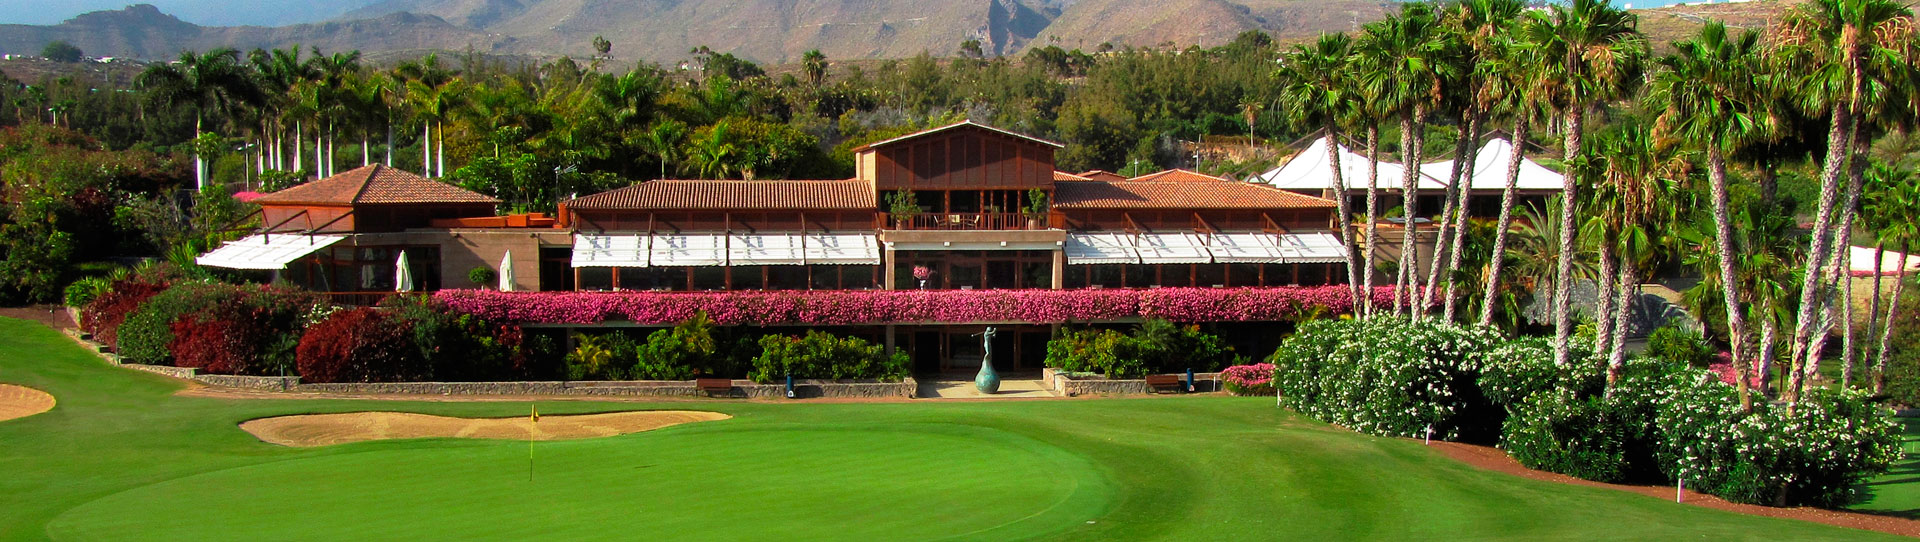 Spain golf courses - Las Américas Golf Course - Photo 1